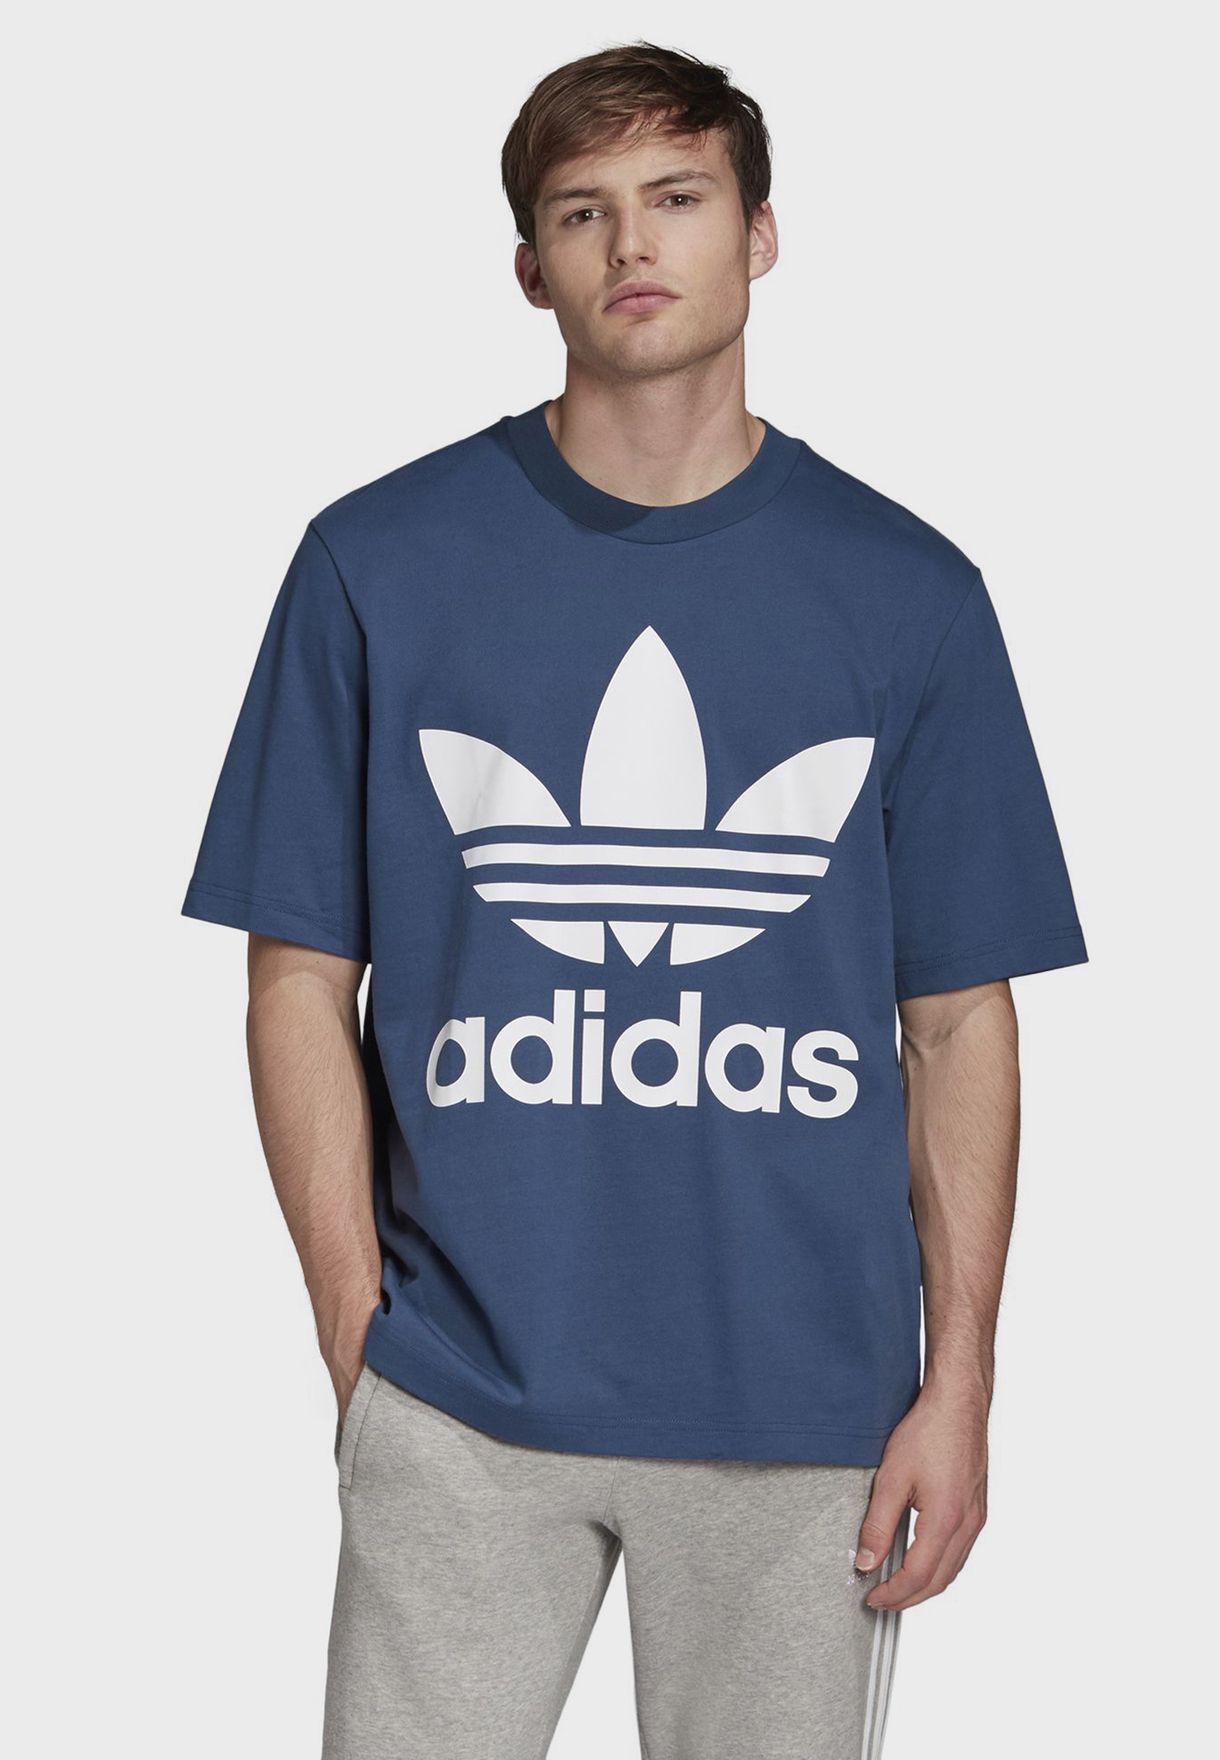 adidas oversized t shirt mens